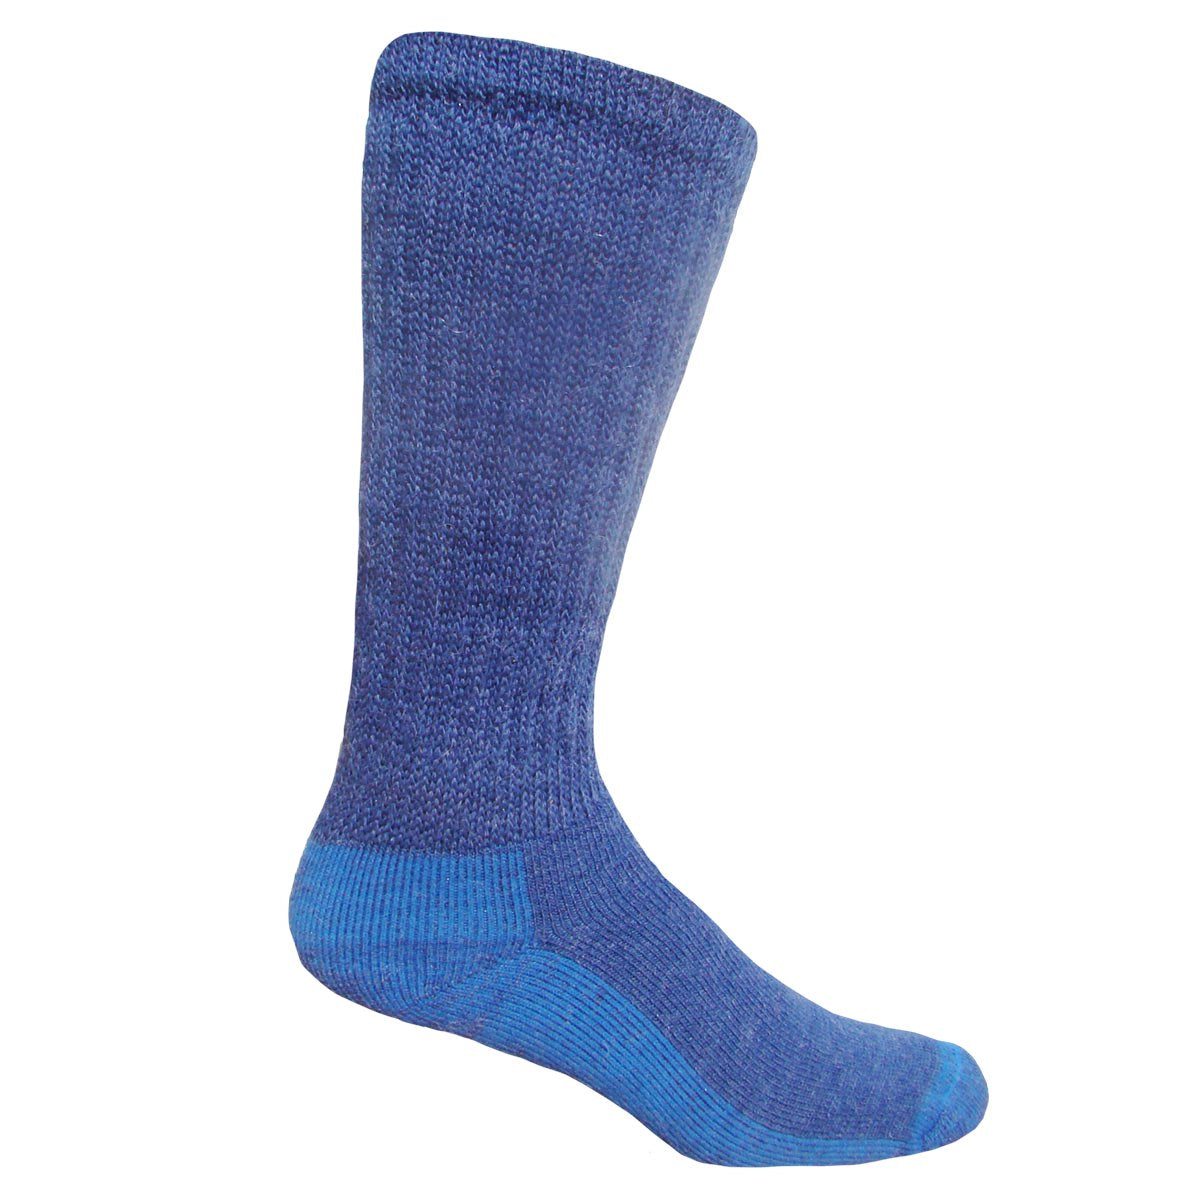 Alpaca, Alpaca Socks, Therapeutic Socks, Alpaca Blend Over the Calf Socks (LC35R), Alpaca Products, Hypoallergenic, Apparel, Alpaca Clothing